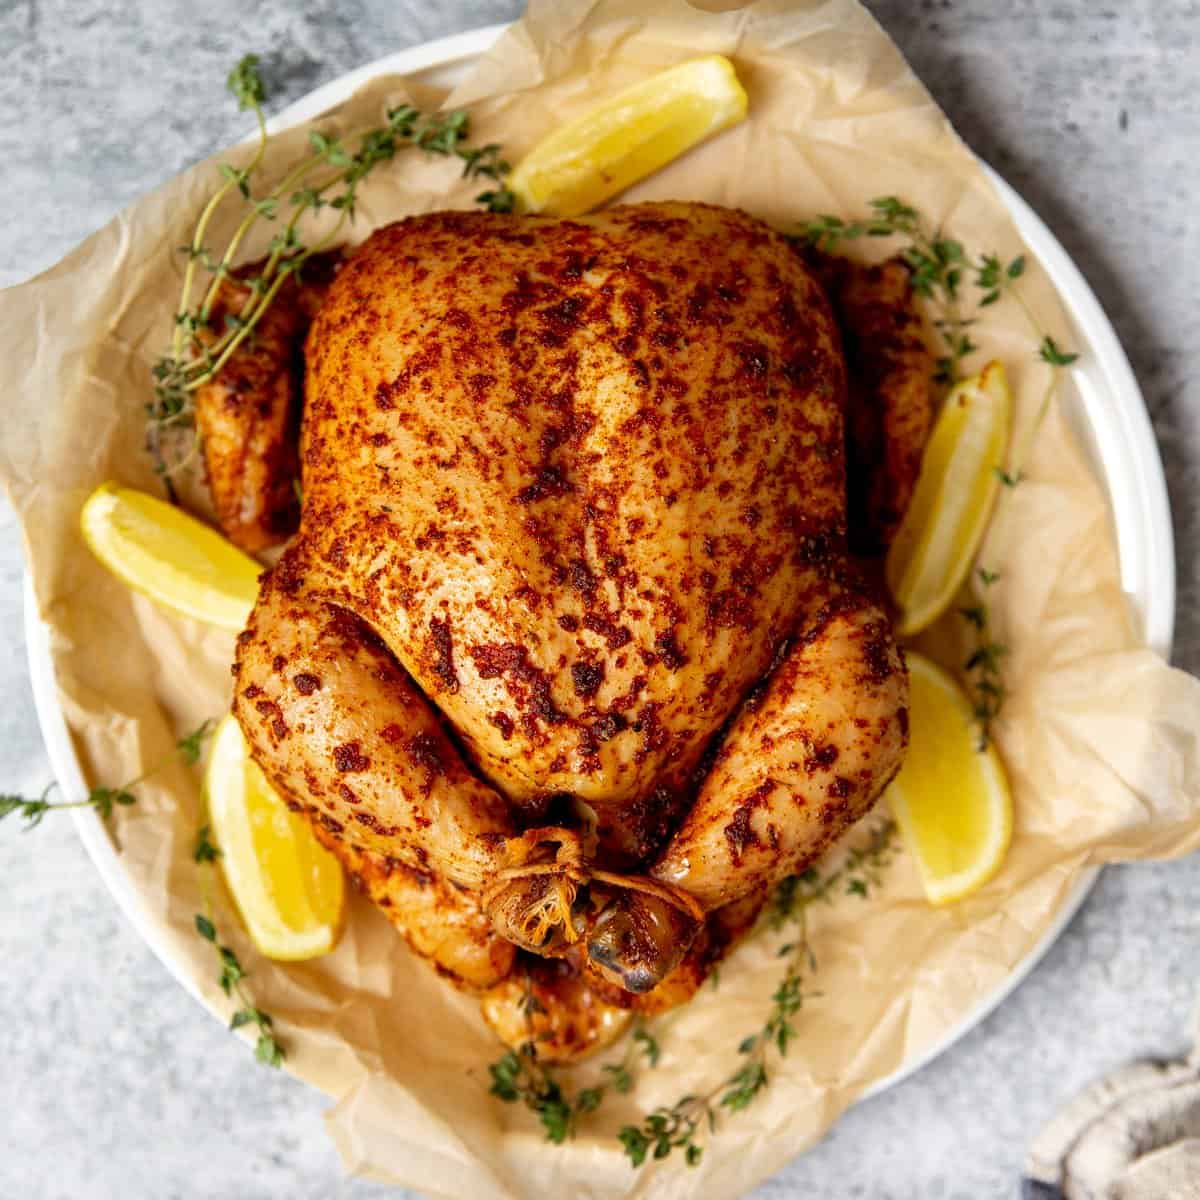 https://fromscratchfast.com/wp-content/uploads/2022/06/Traeger-Smoked-Chicken-Recipe_SQUARE-1.jpg